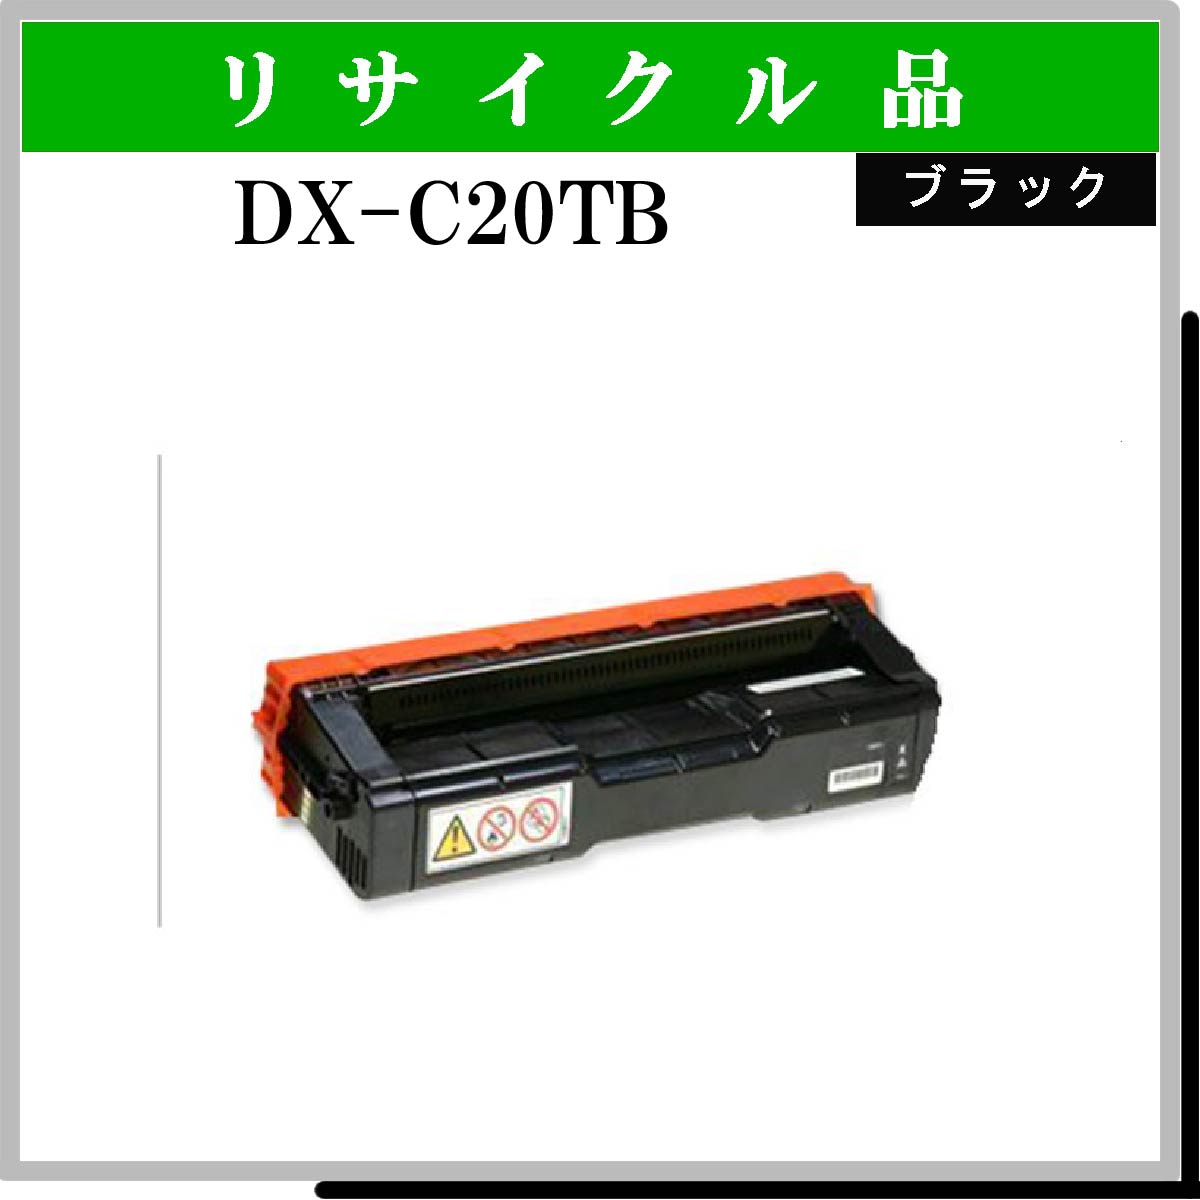 DX-C20TB